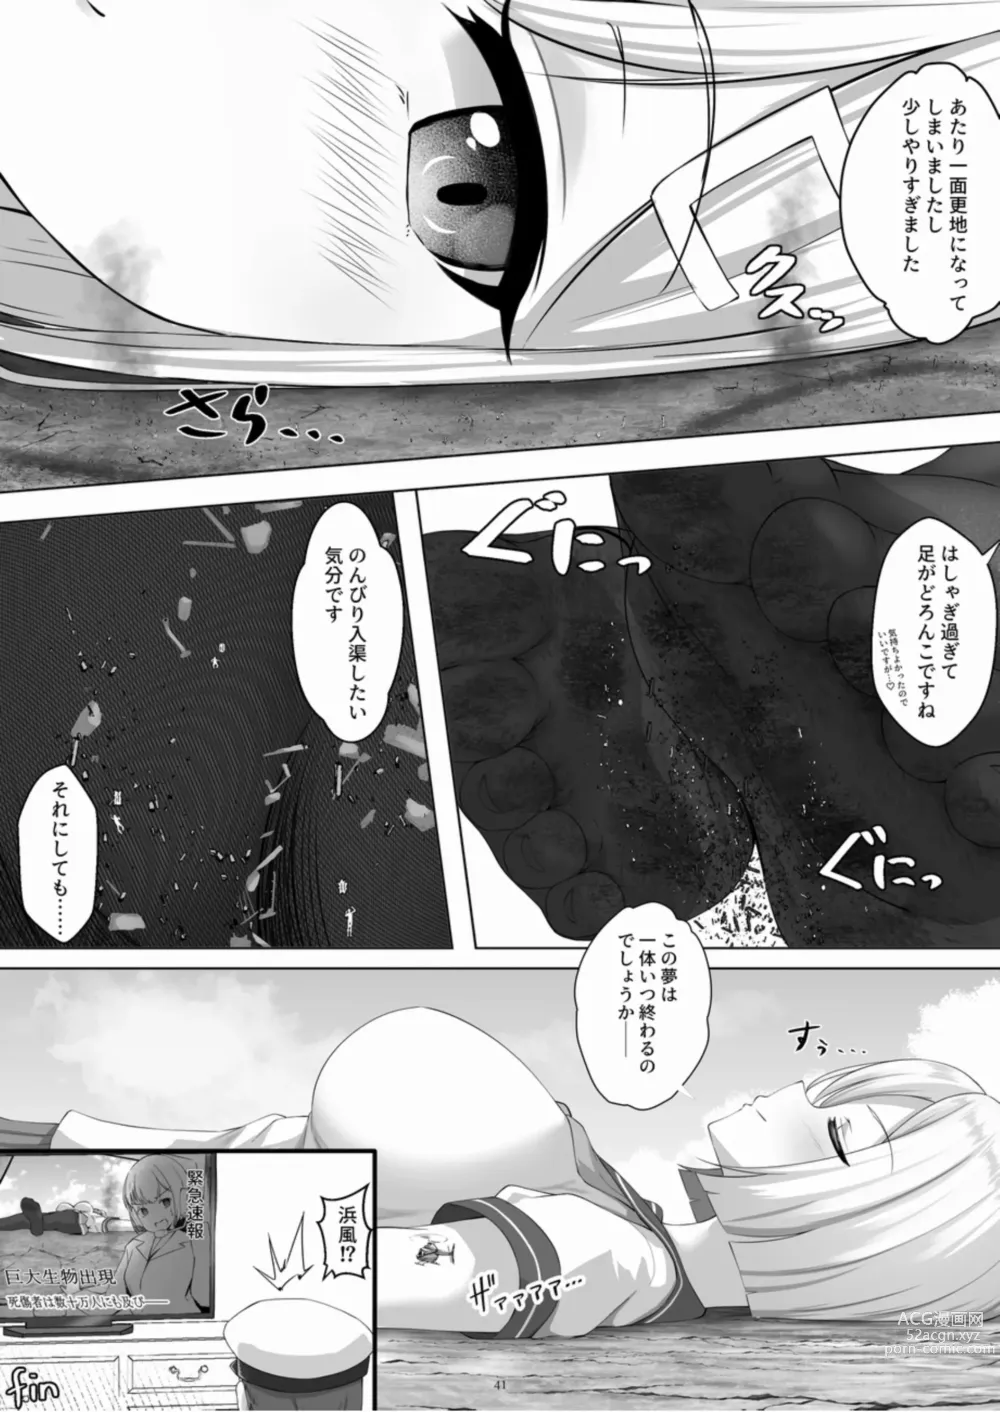 Page 41 of doujinshi Tenshin Ranman Gigantic 8